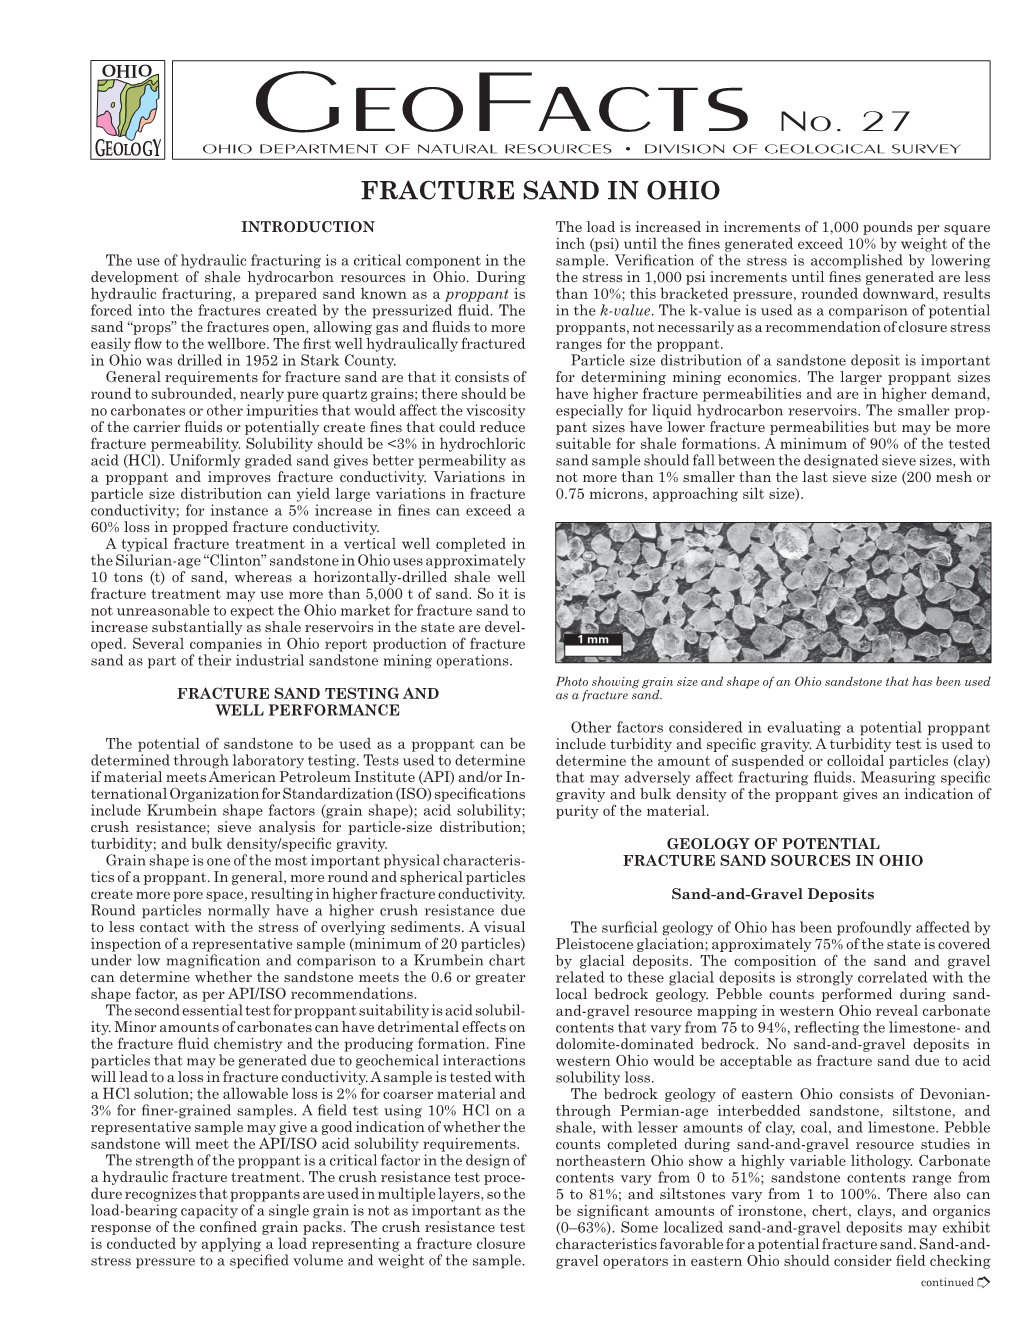 Geofacts No. 27—Fracture Sand in Ohio